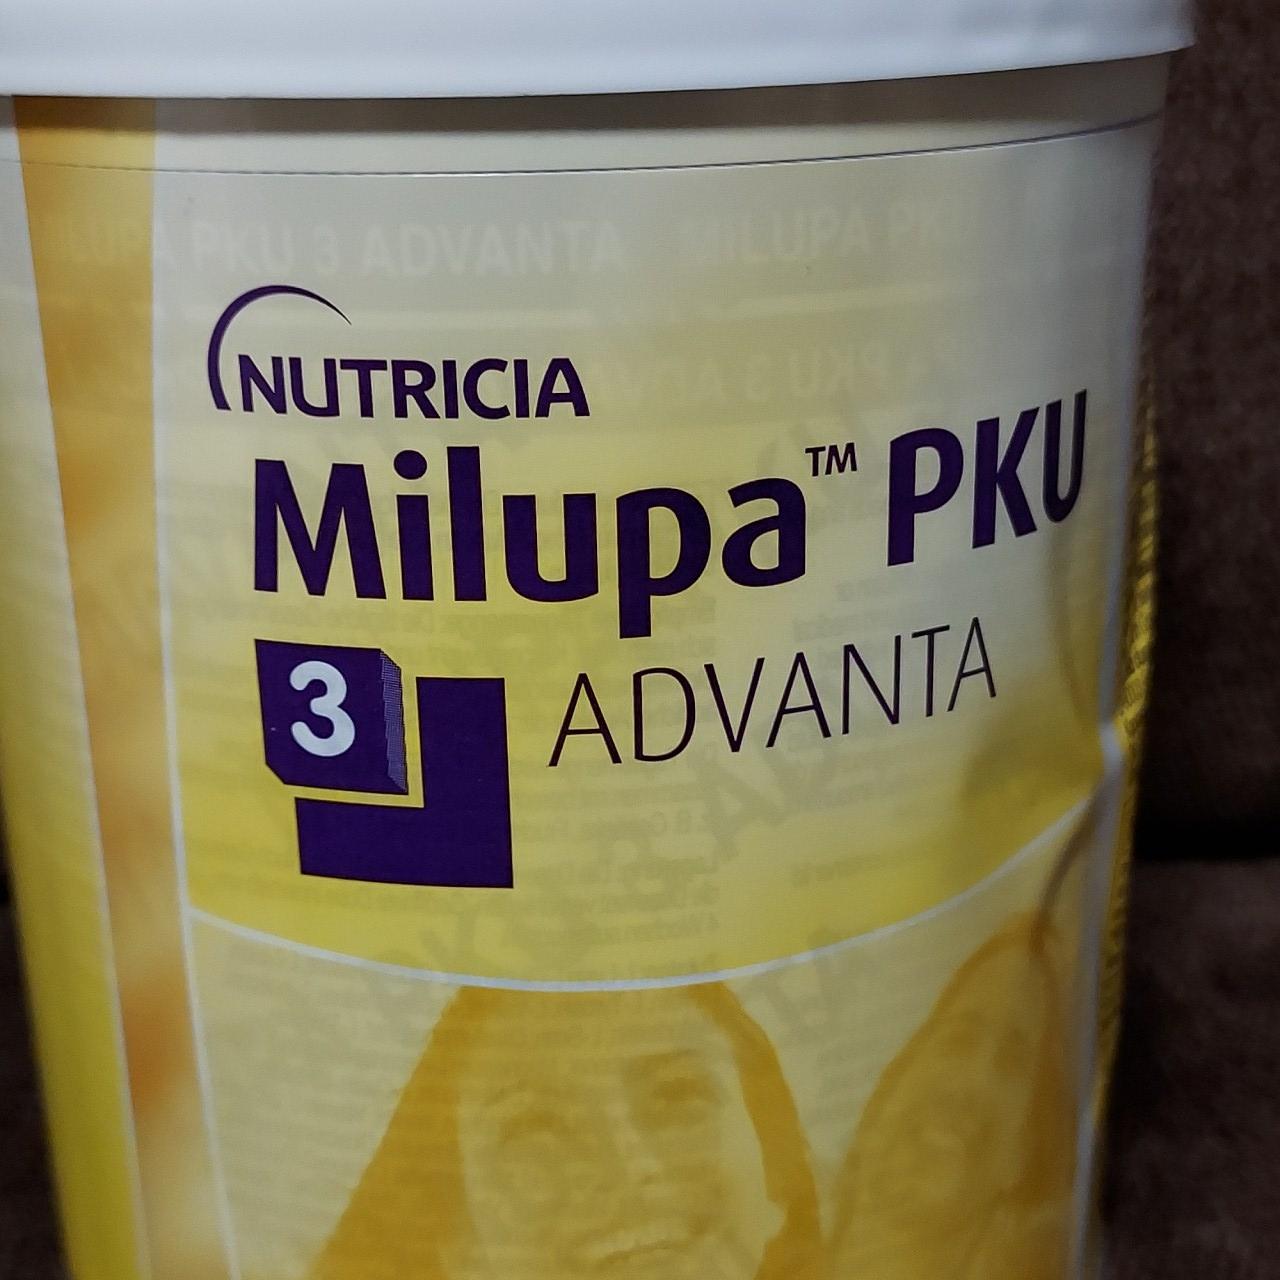 Fotografie - Milupa PKU 3 Advanta Nutricia